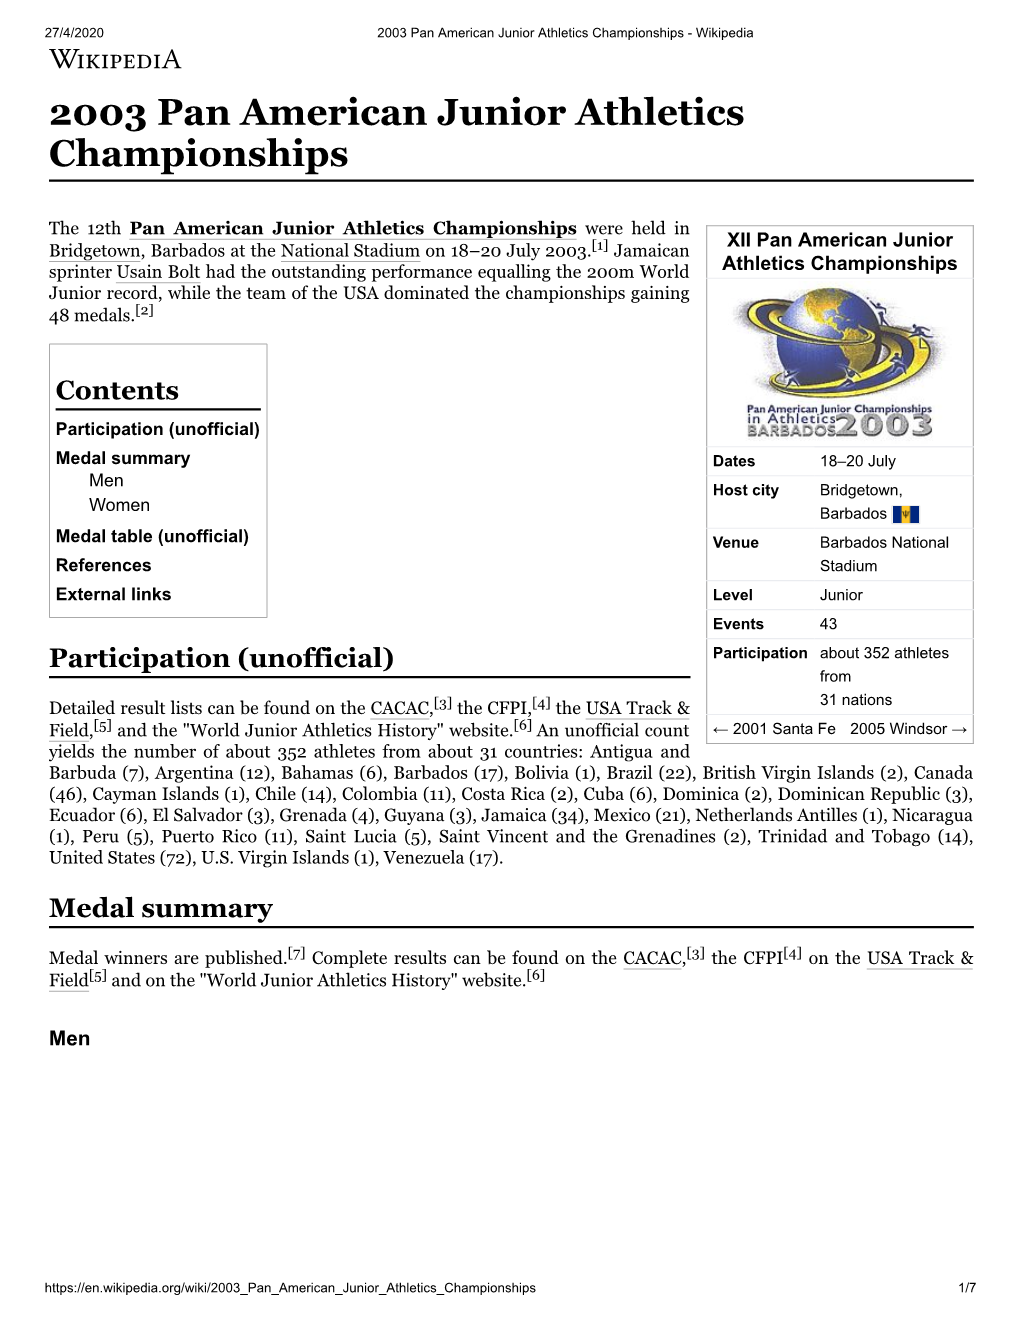 2003 Pan American Junior Athletics Championships - Wikipedia